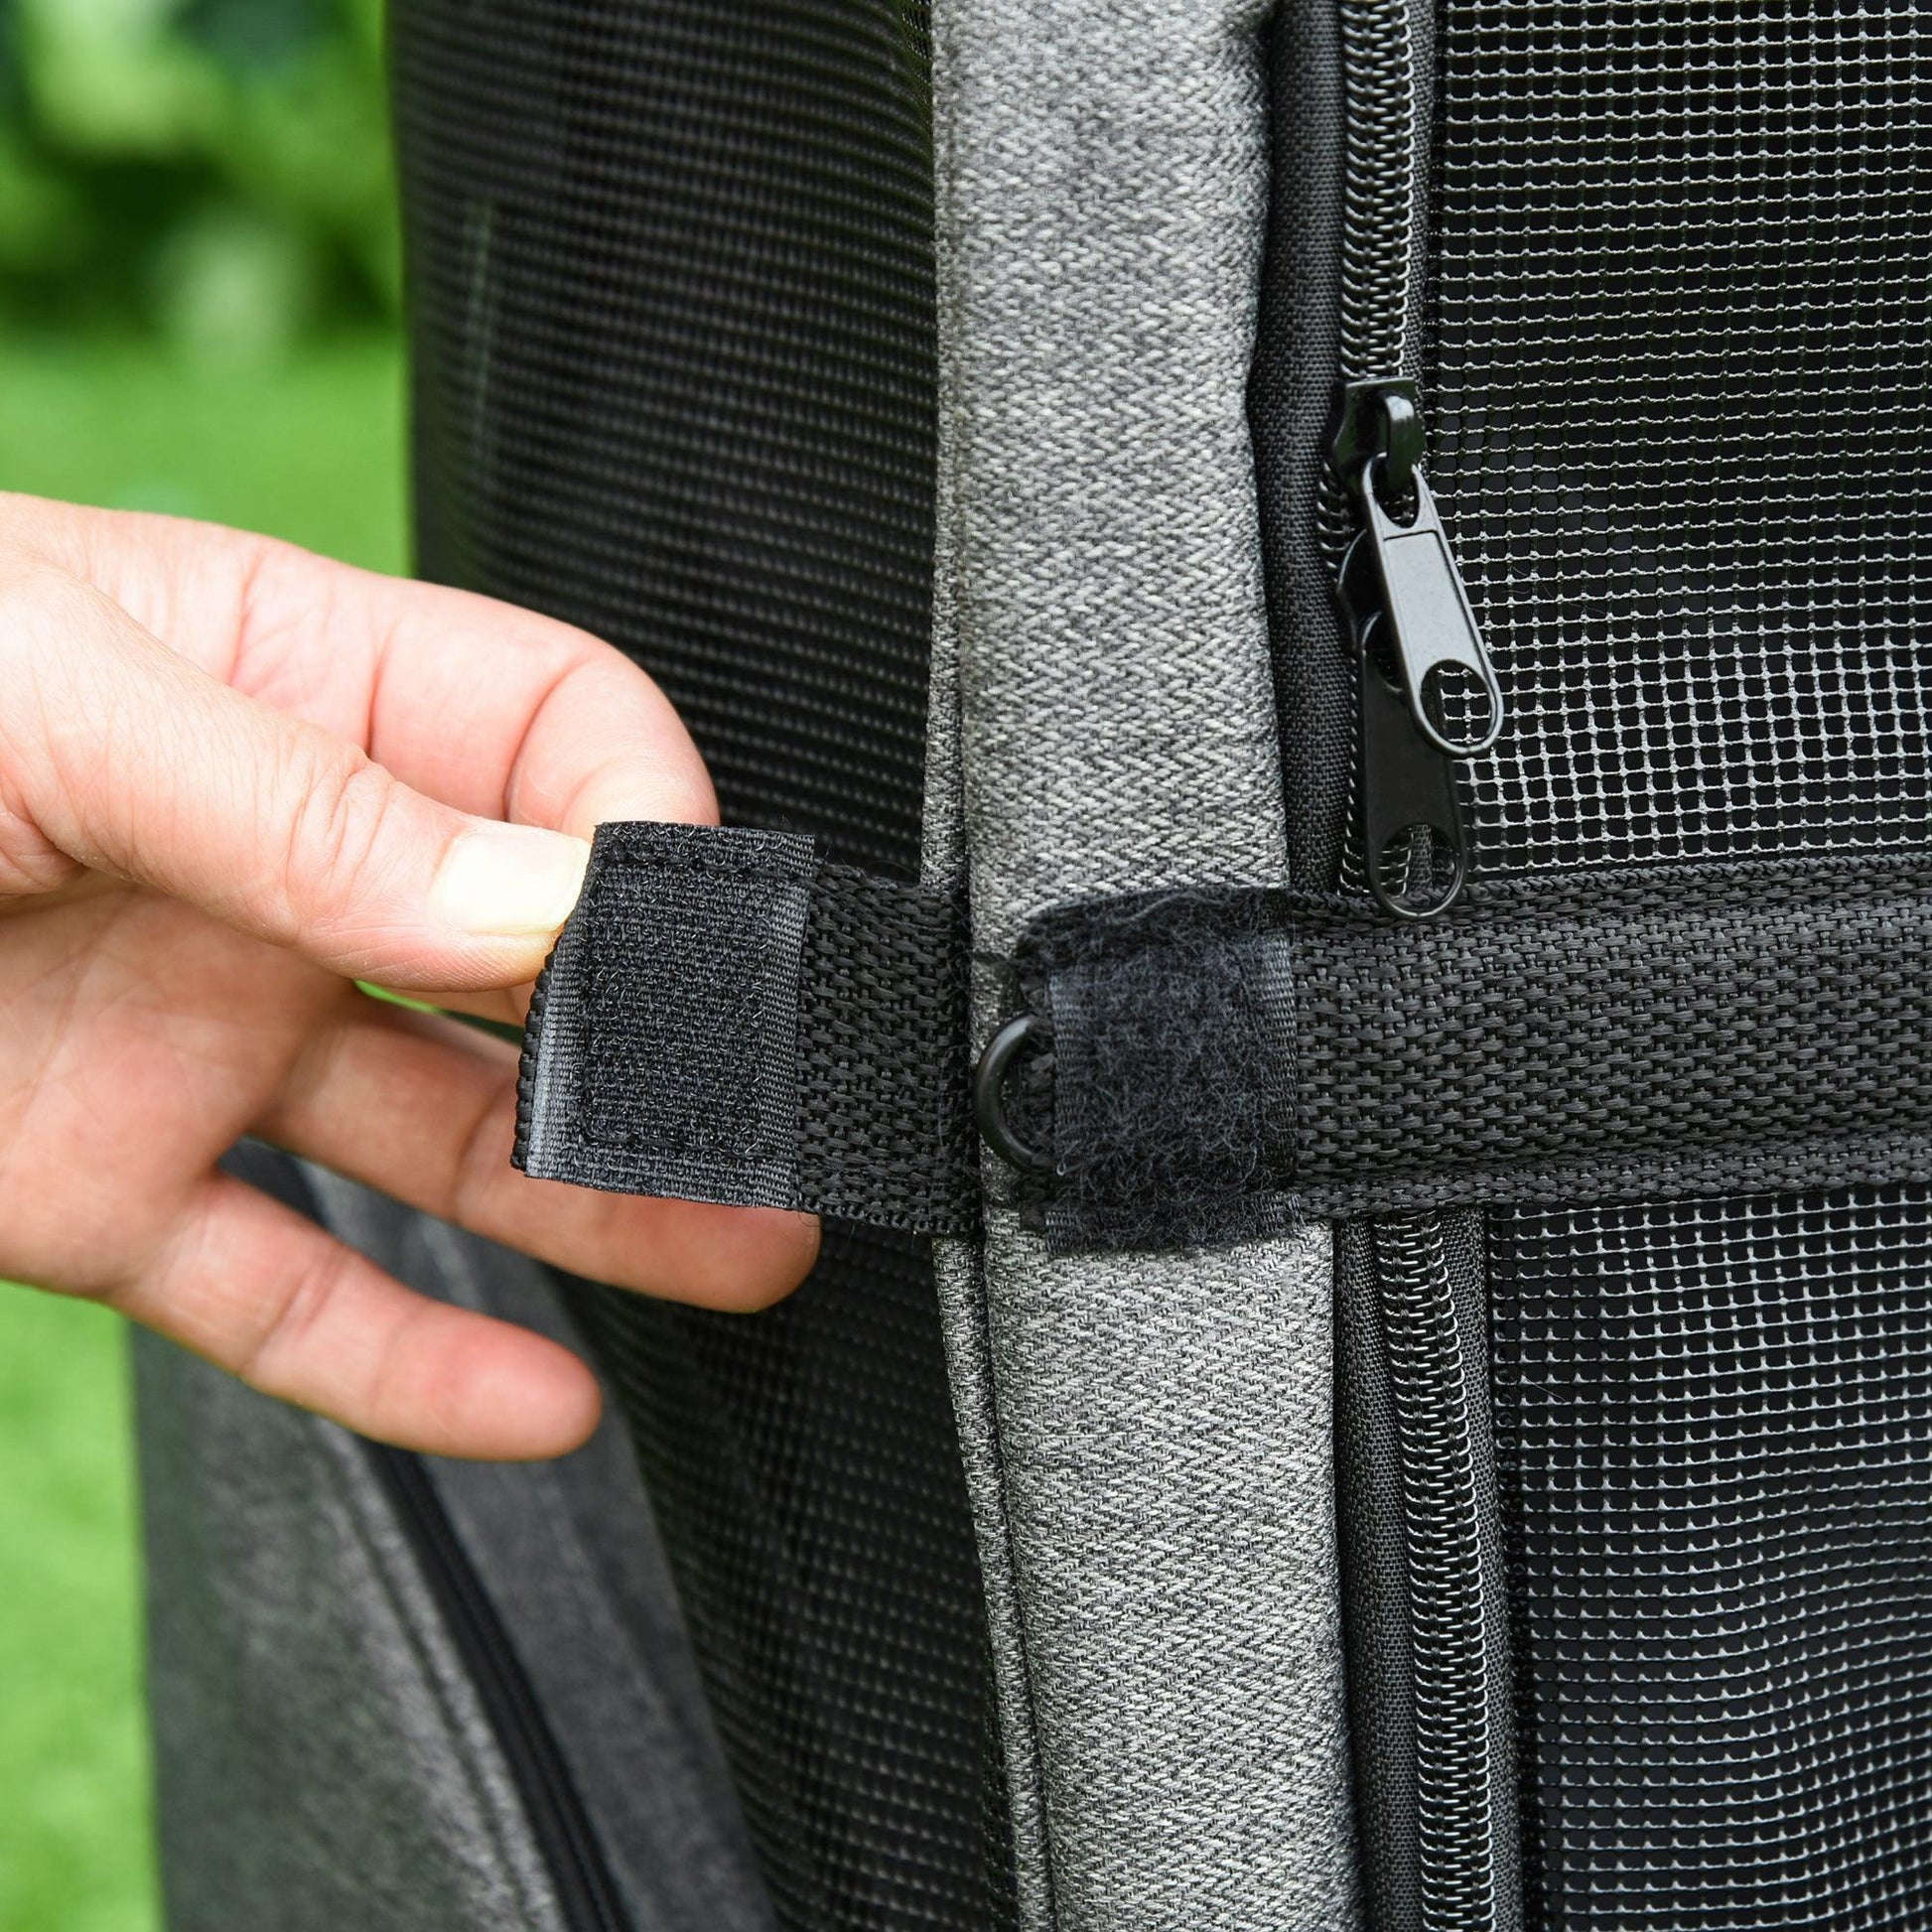 PawHut Pet Travel Backpack Bag with Trolley: Portable & Convenient - ALL4U RETAILER LTD